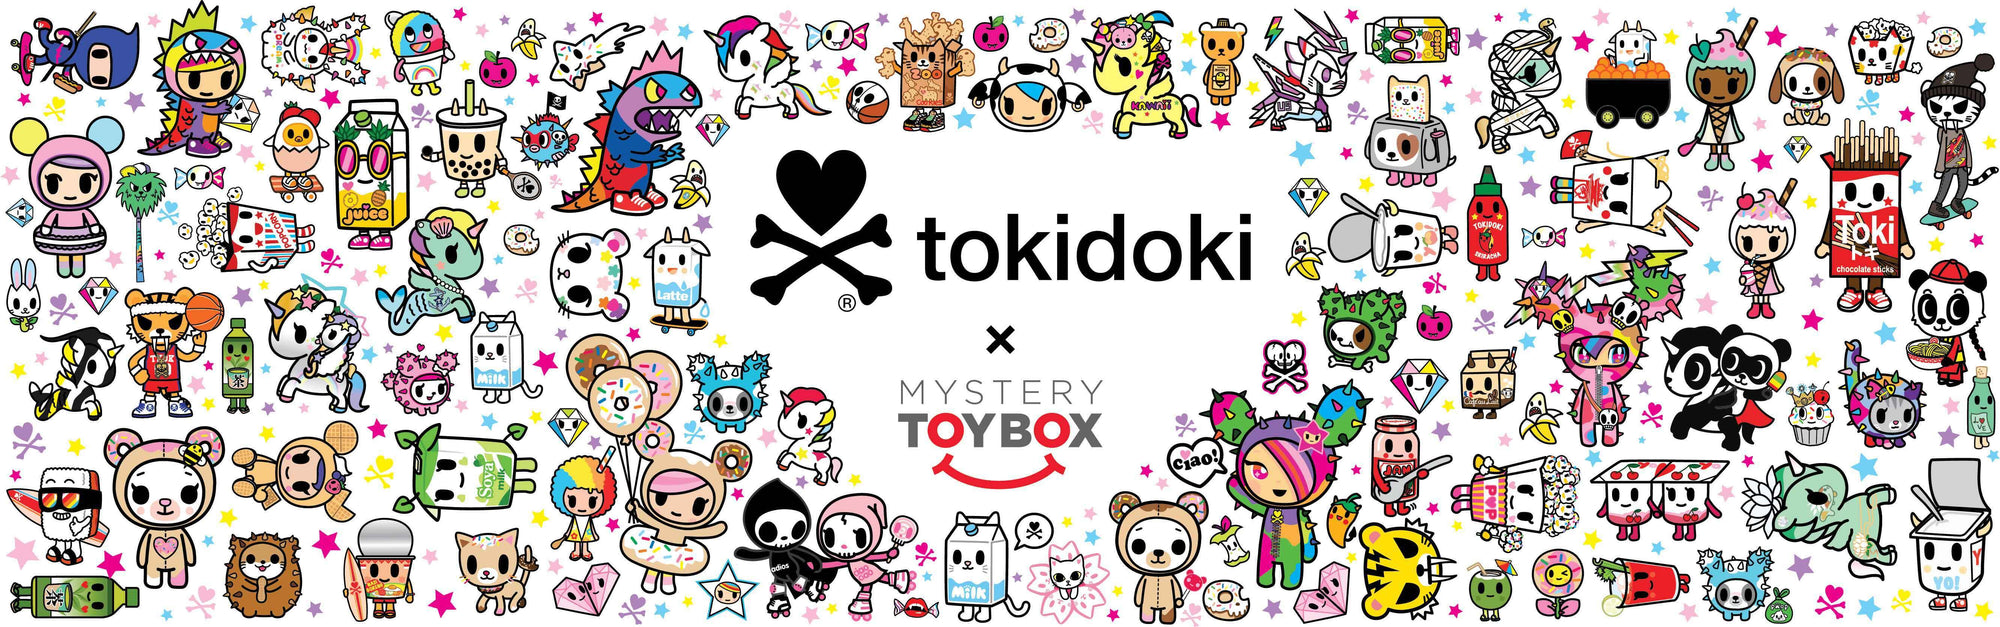 tokidoki mystery toy box